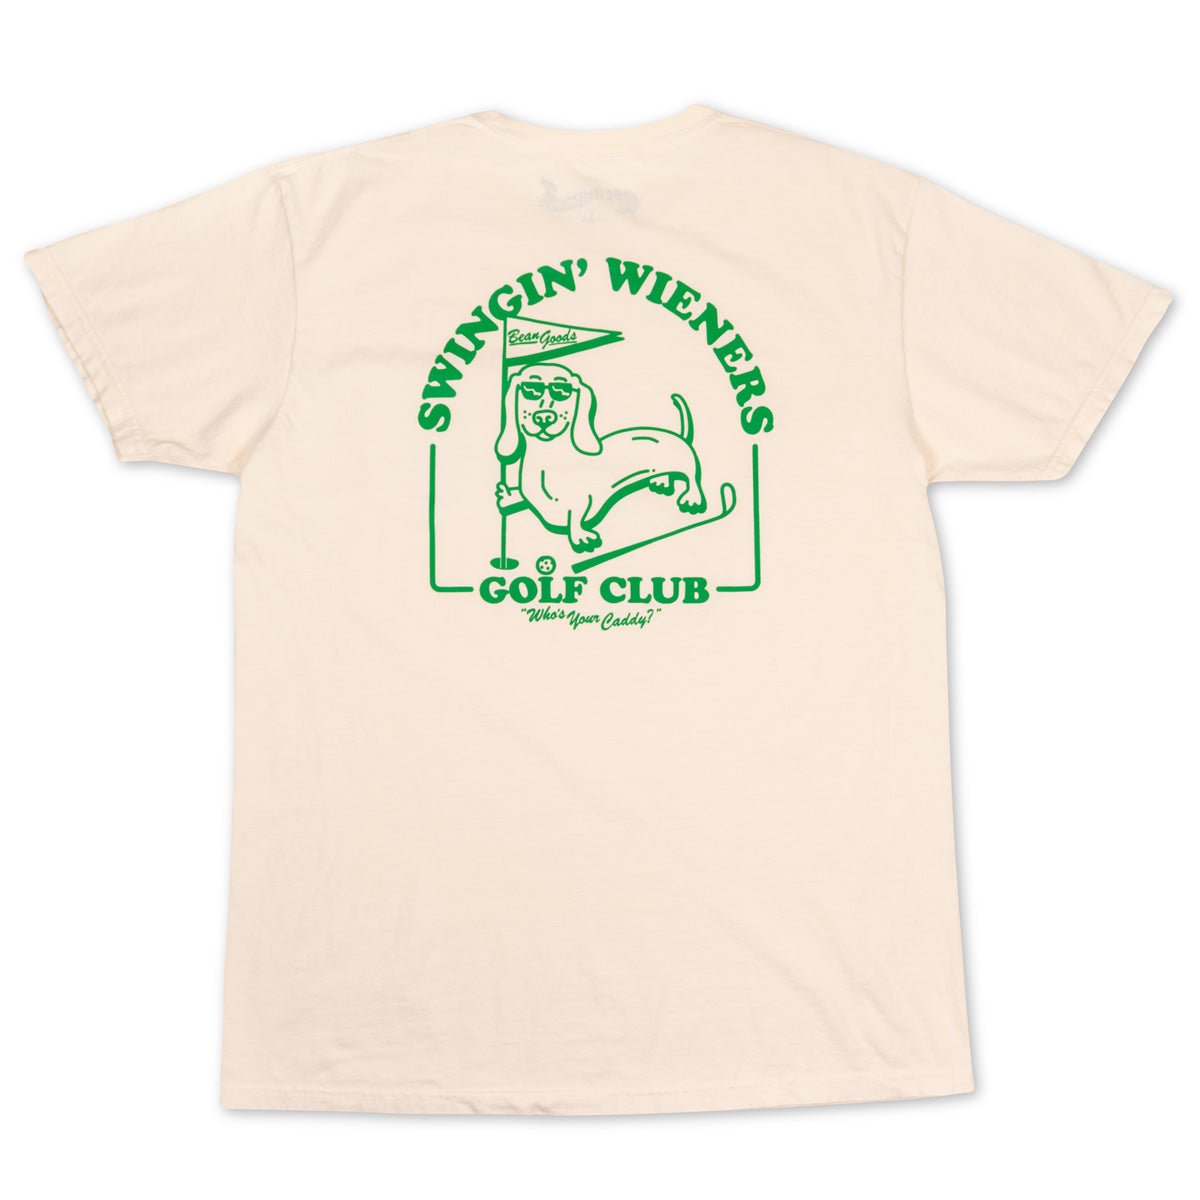 swingin' wieners golf club unisex pocket tee - bean goods